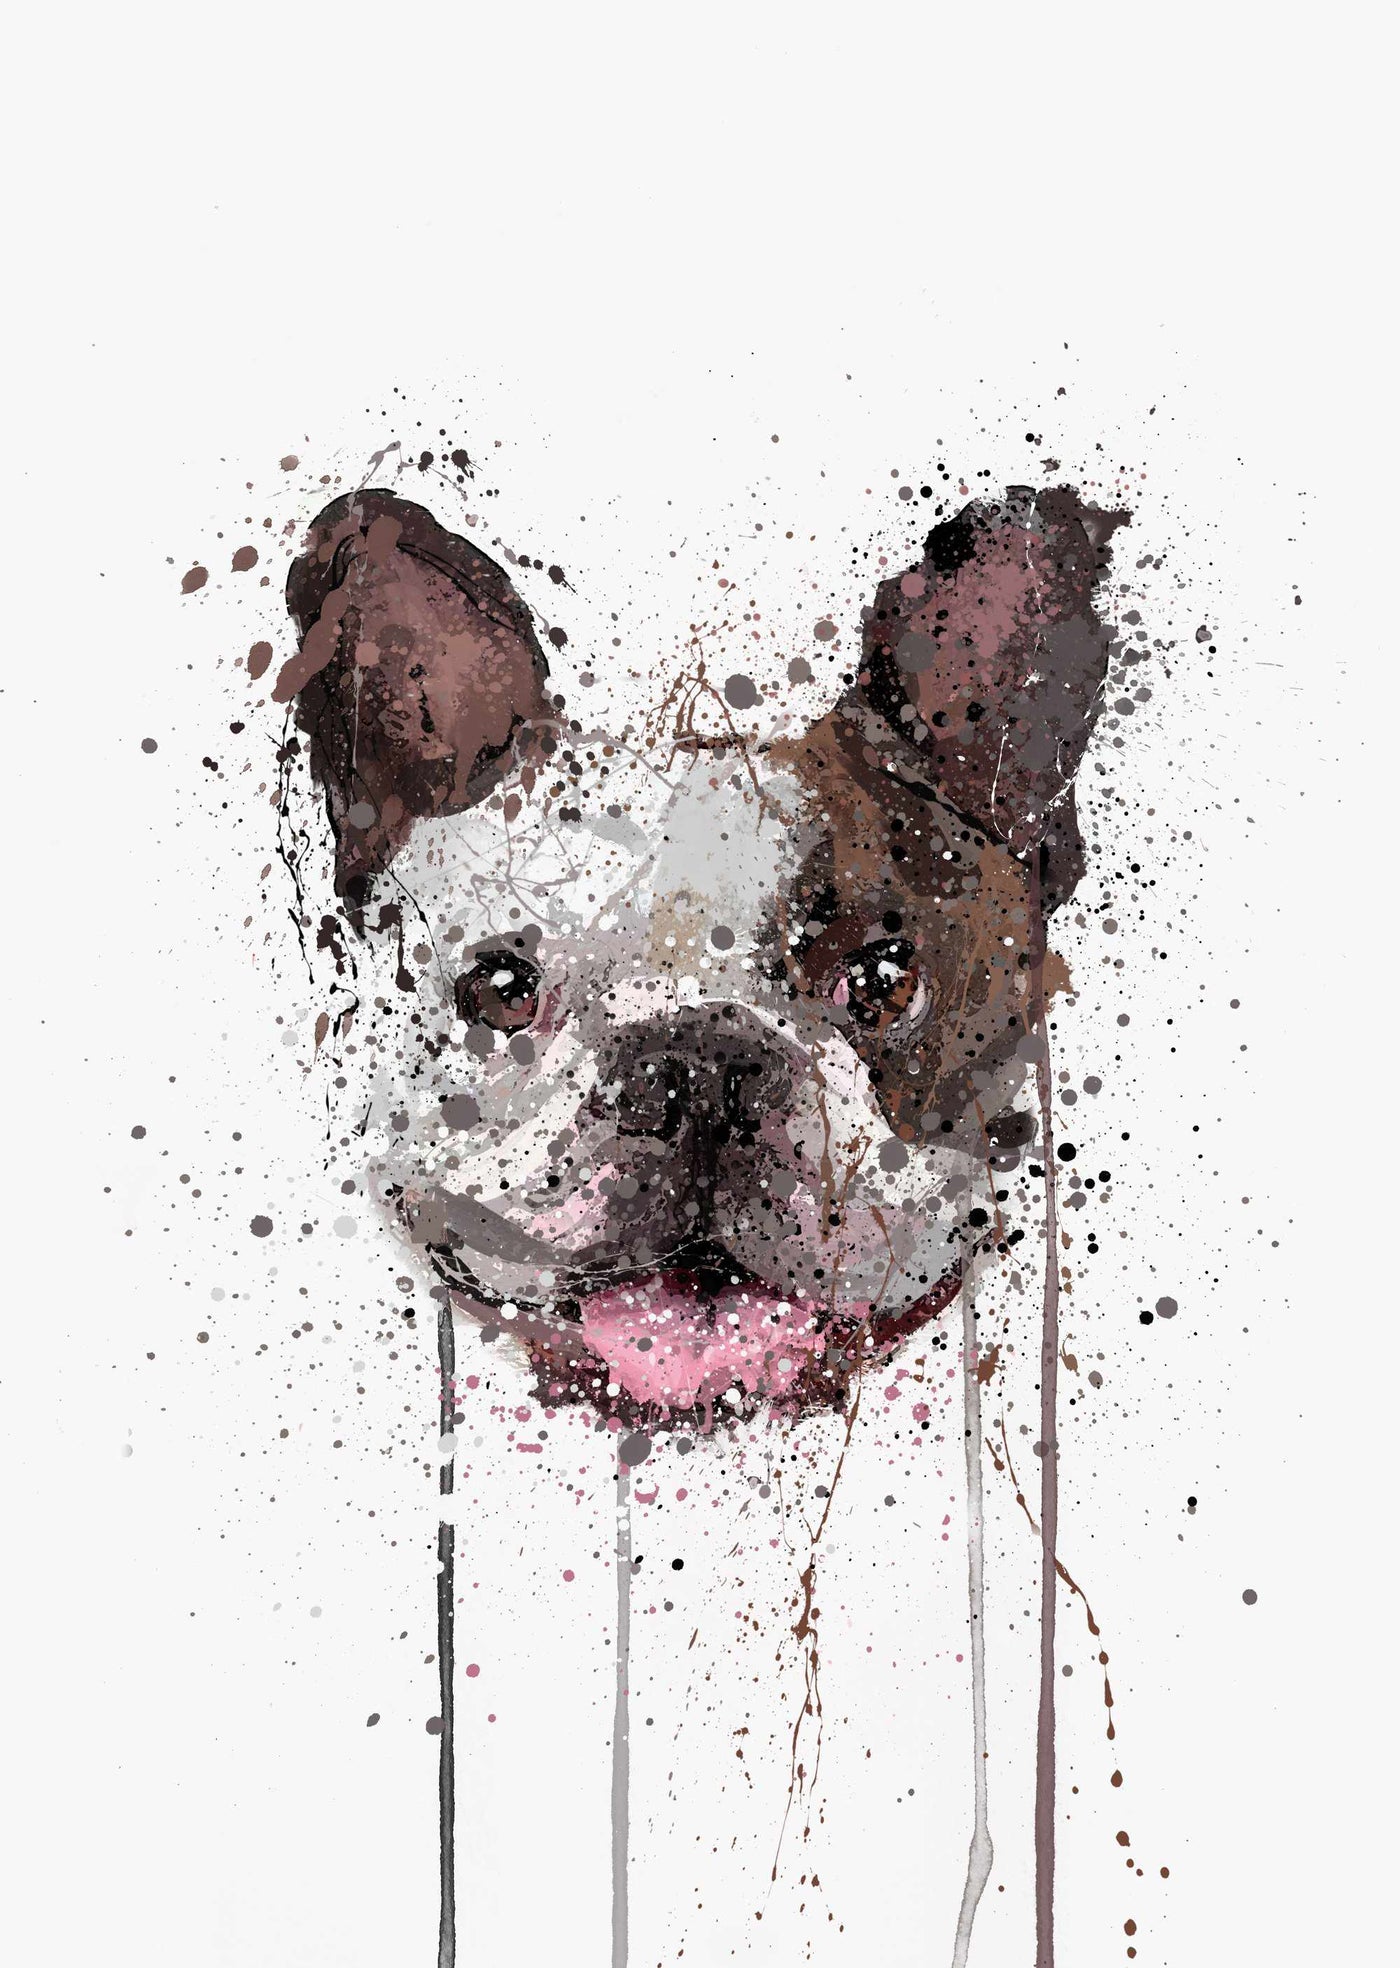 French Bulldog Wall Art Print (Light)-We Love Prints